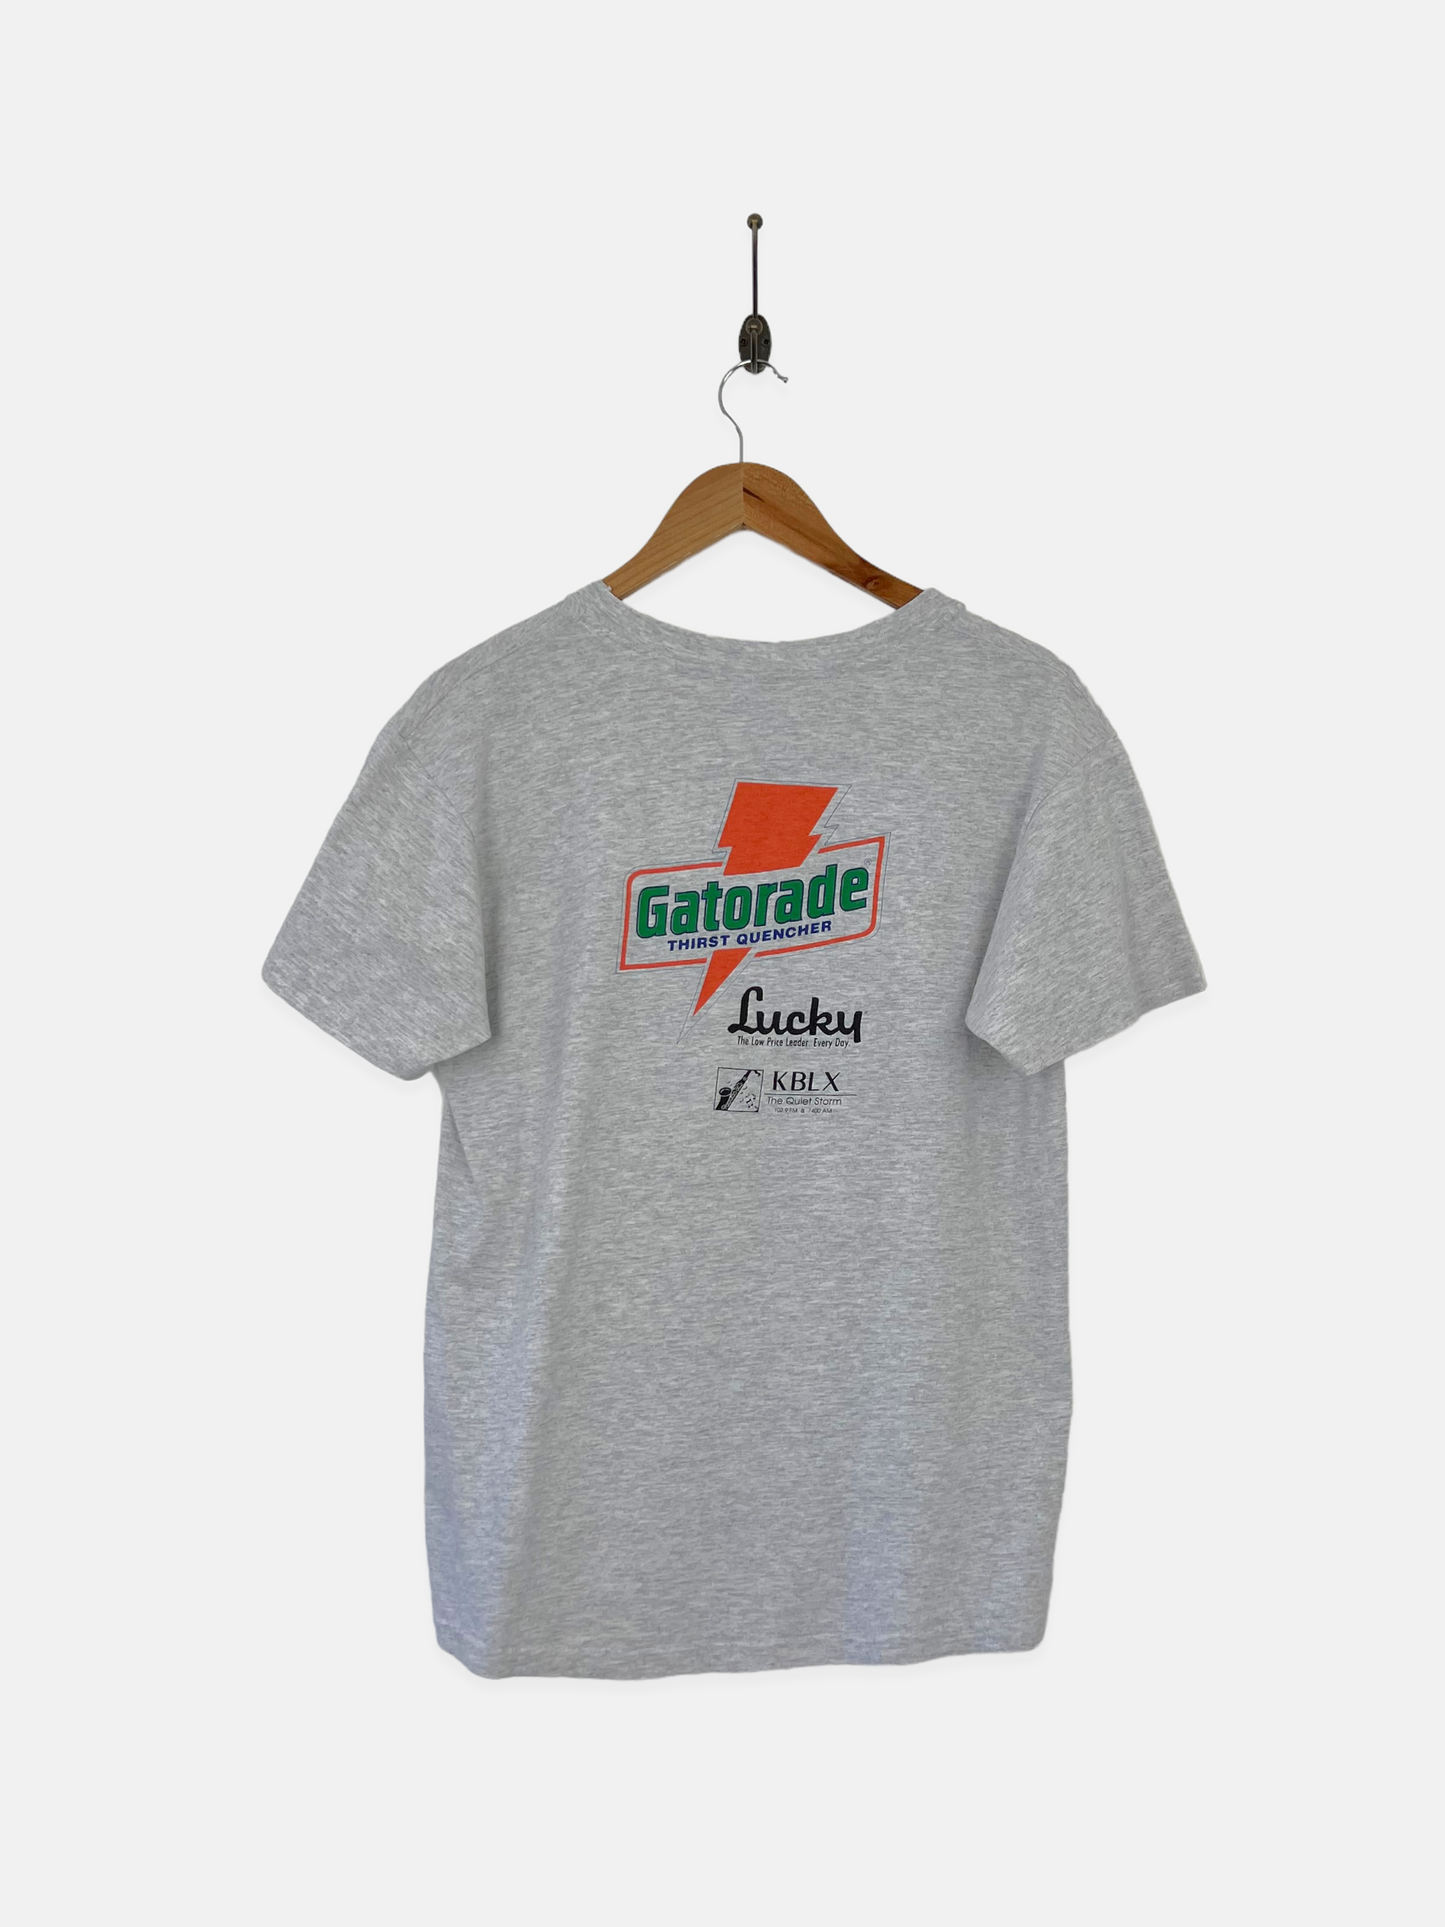 1993 San Francisco Giants MLB Vintage T-Shirt Size 10